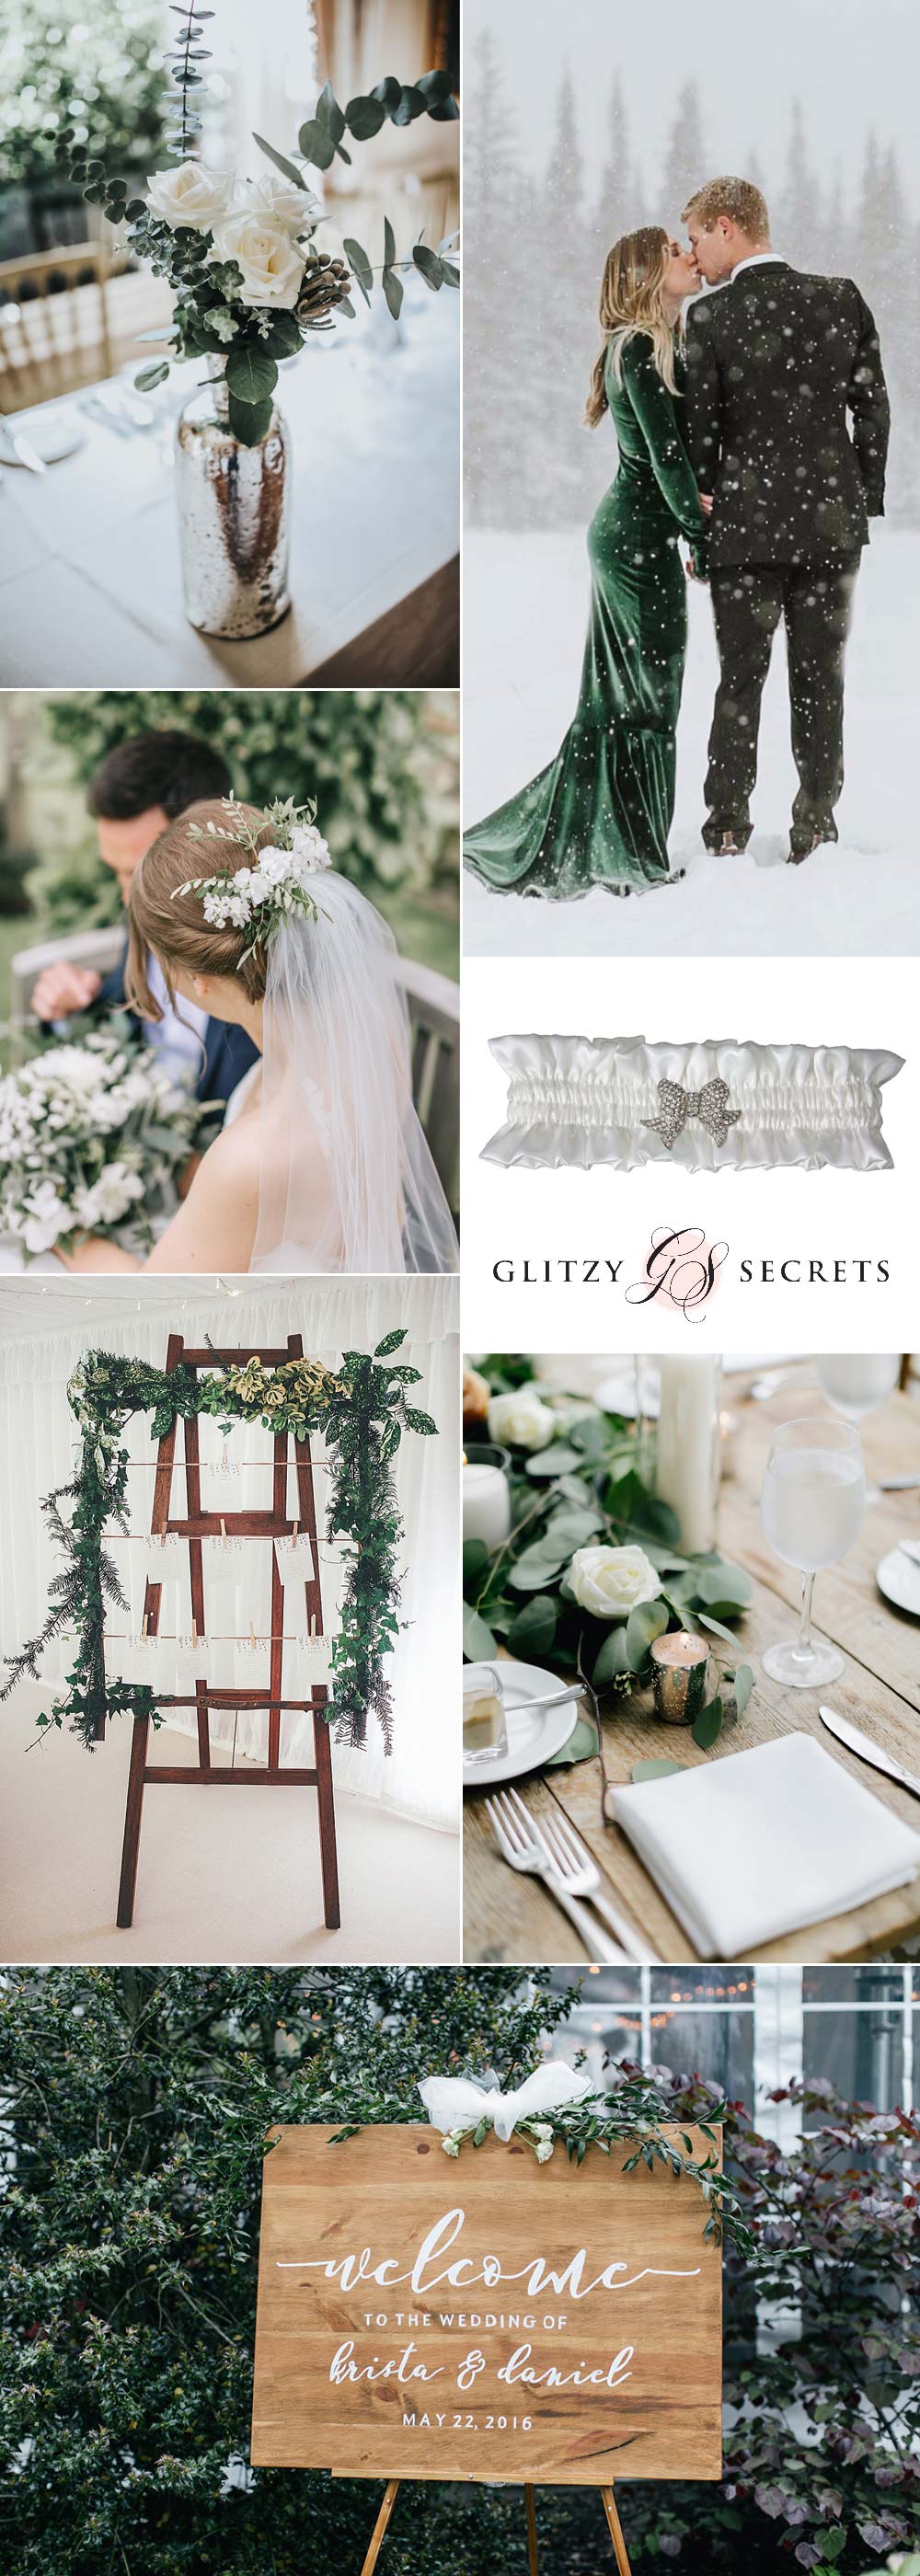 Ideas for a winter wedding green and white colour scheme